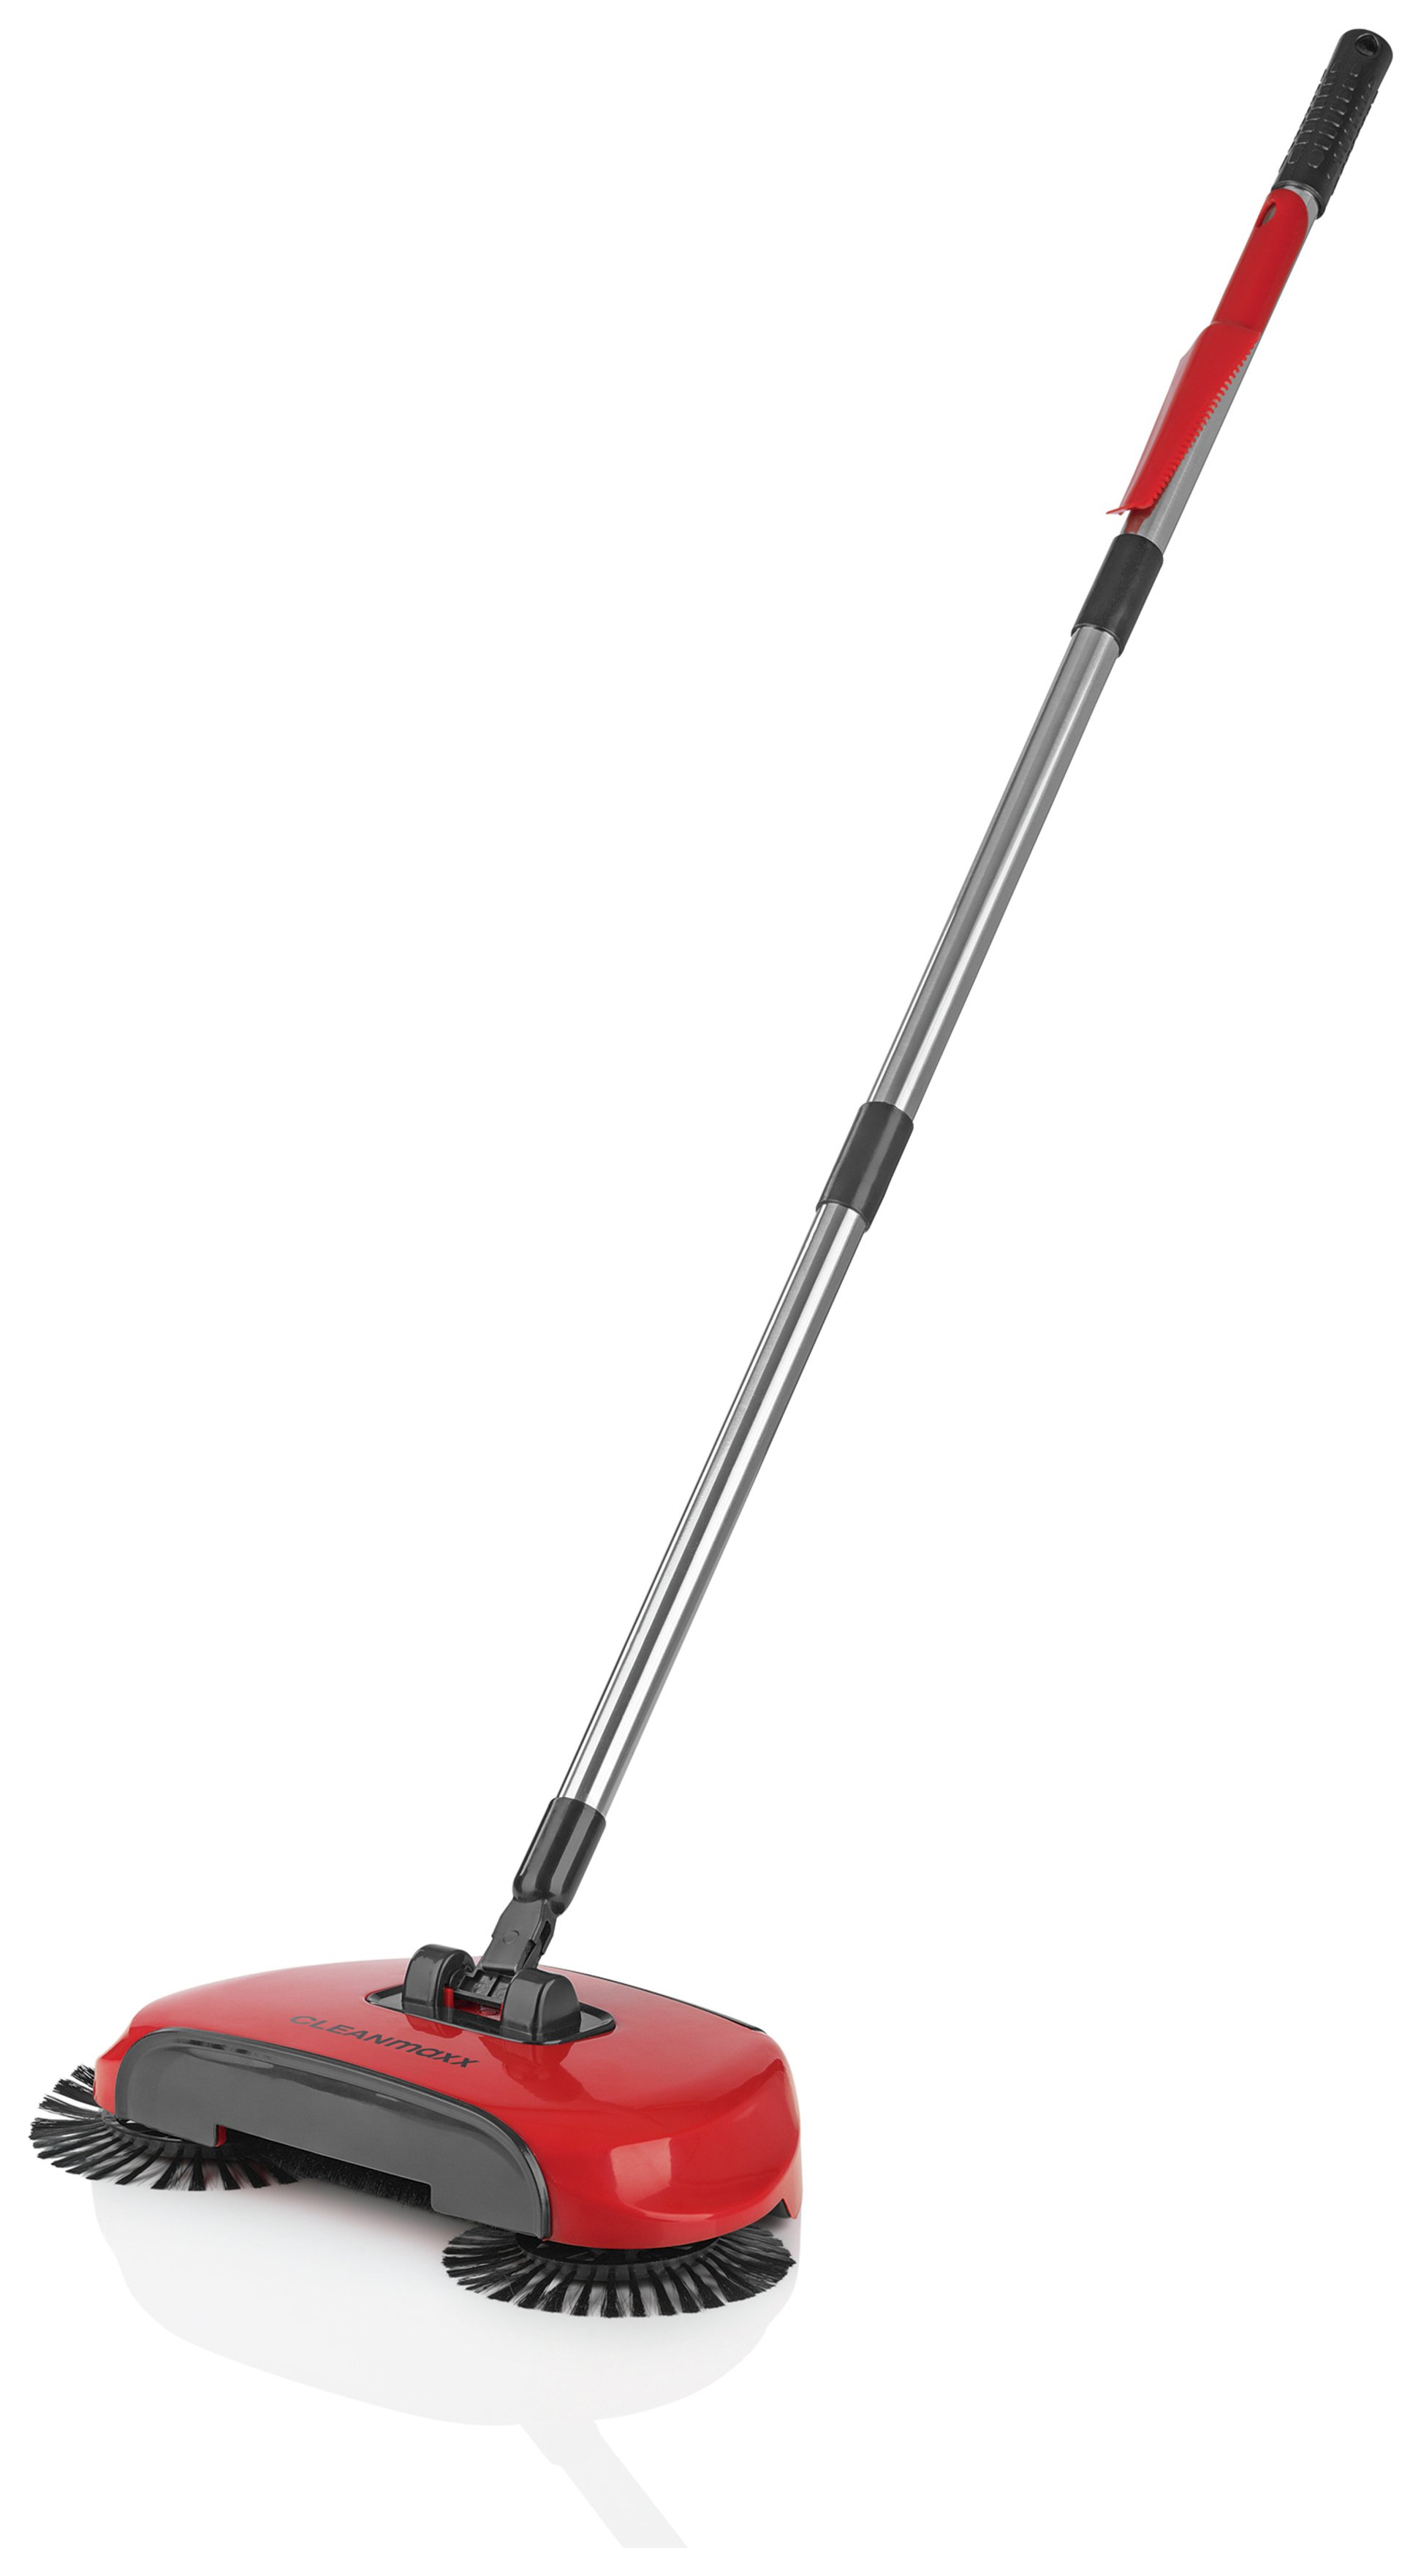 CLEANmaxx 3 Brush Manual Floor Sweeper & Dust Bin - Red